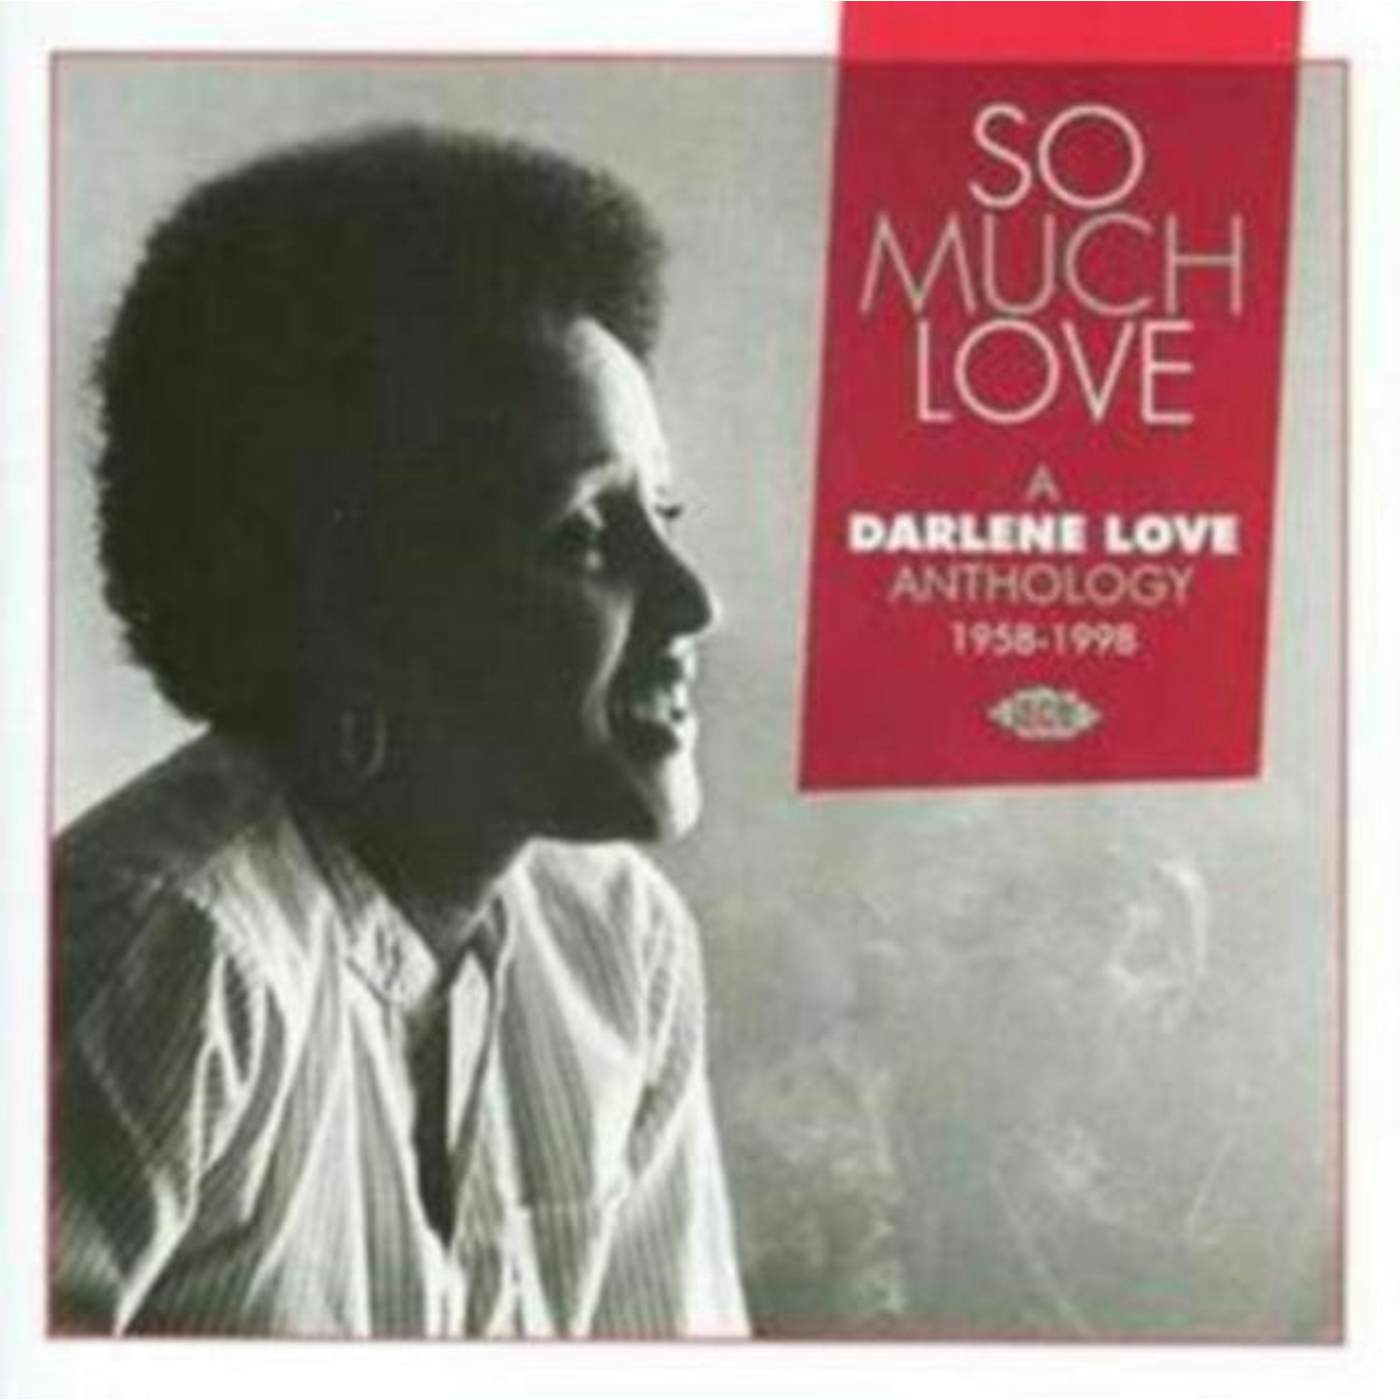 Darlene Love CD - So Much Love - The Anthology 19 58-98